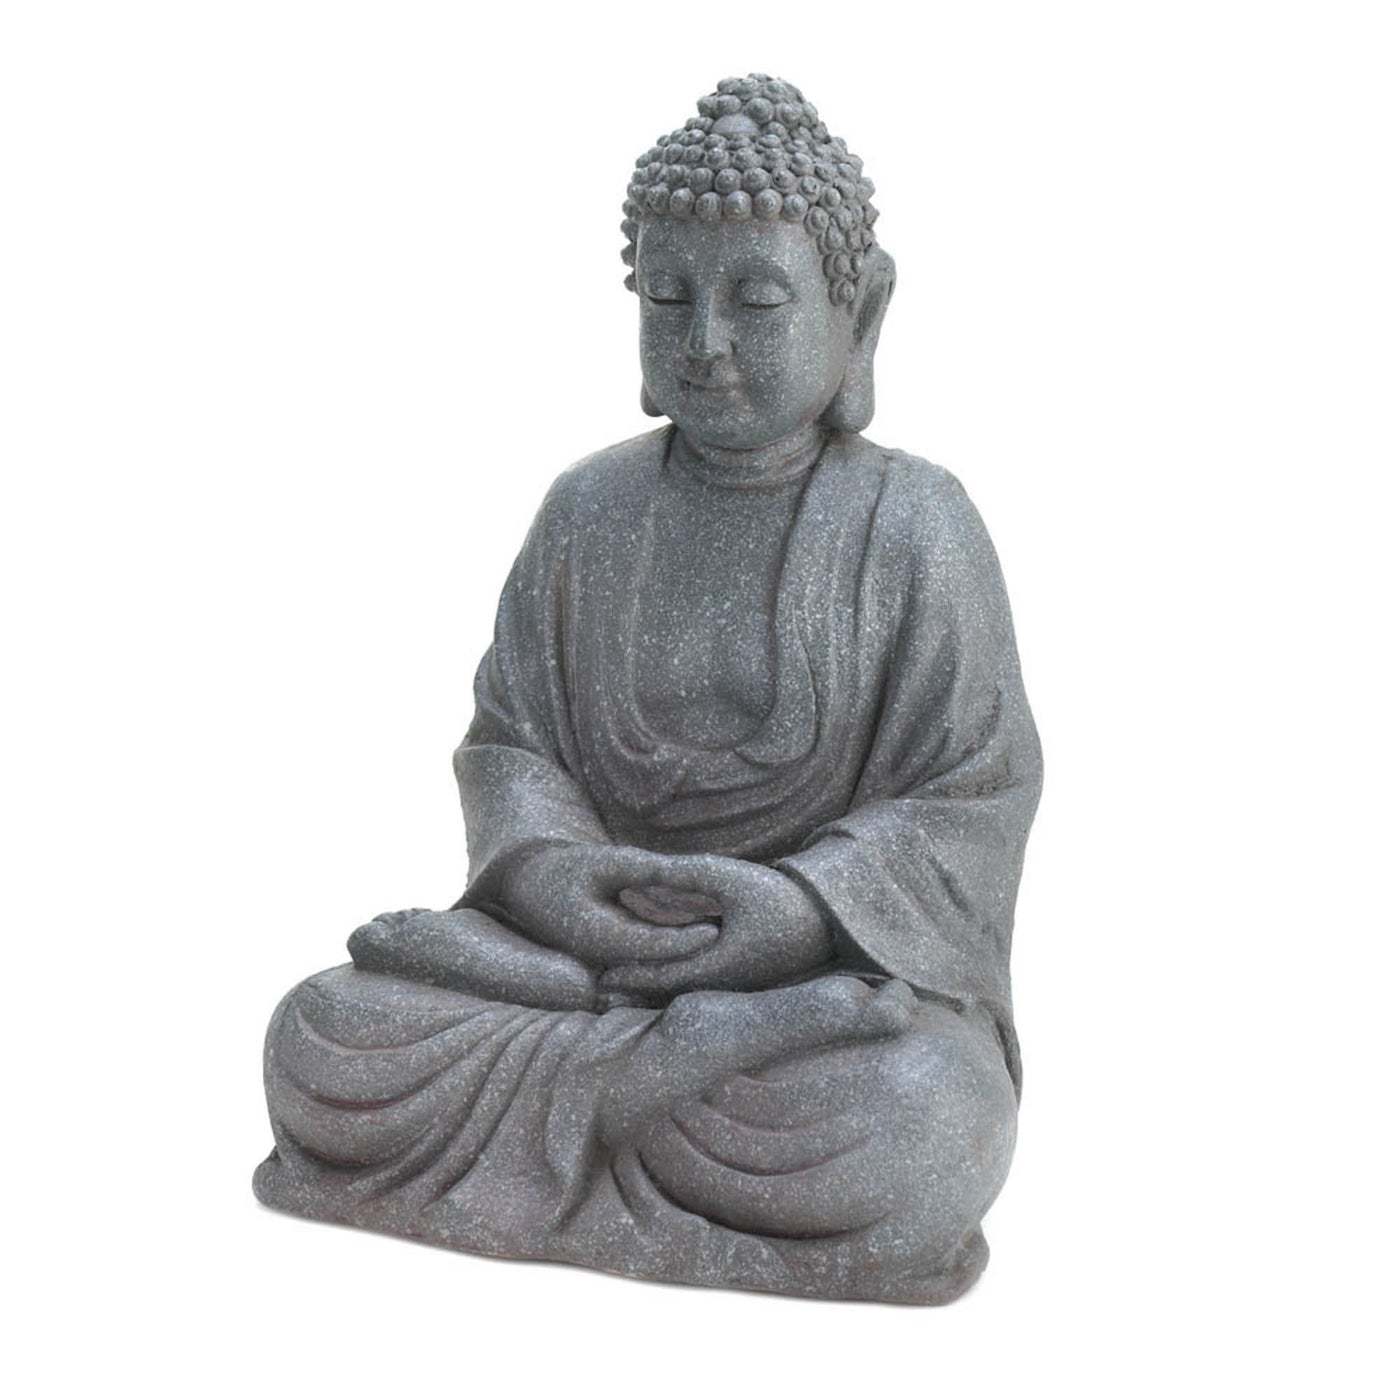 Meditating Buddha Statue - $50.78